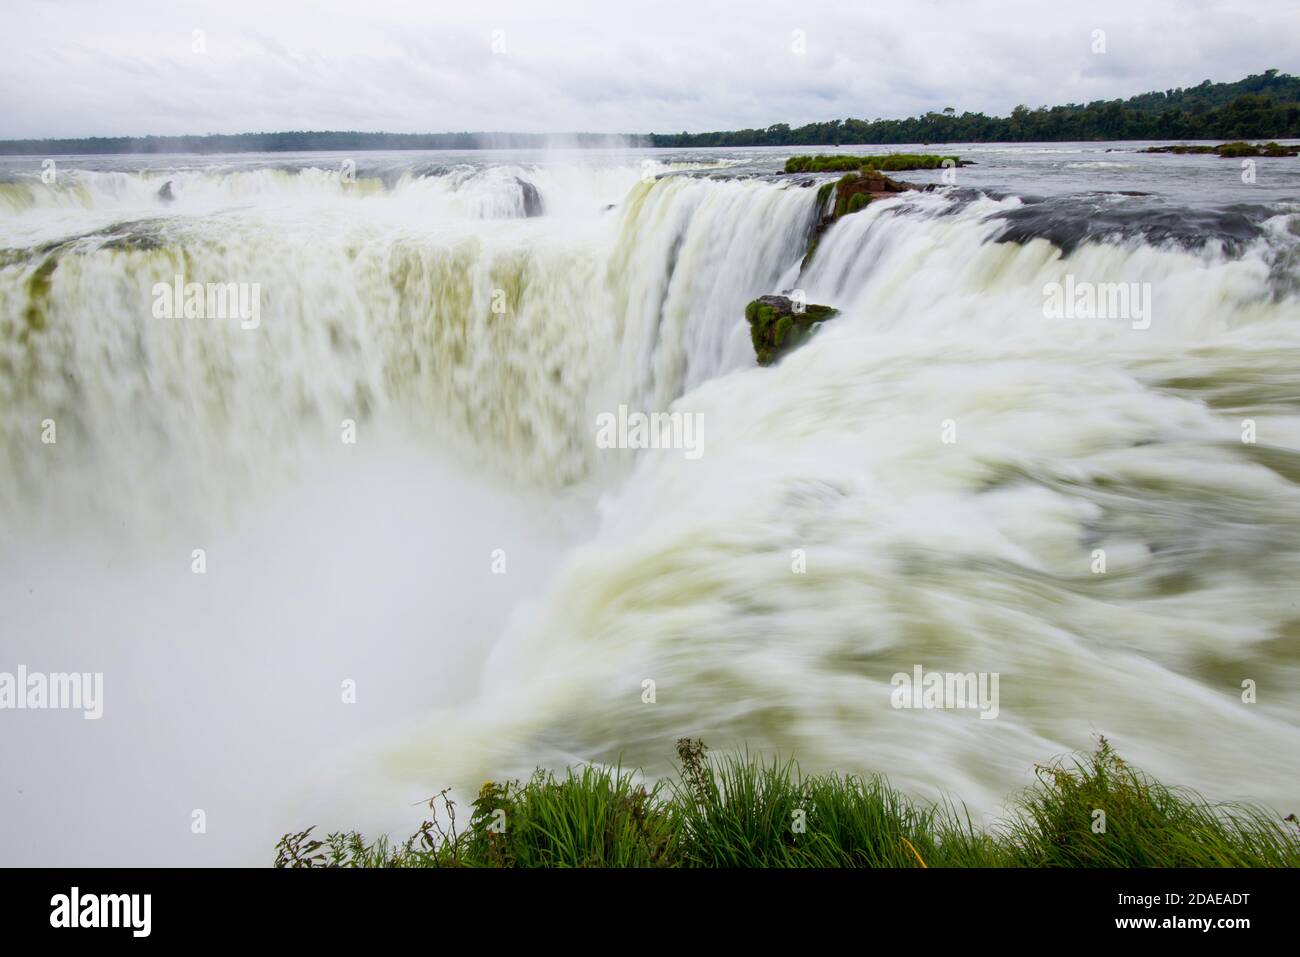 Garganta del Diablo - Iguazu Wasserfälle, Argentinien. Südamerika Stockfoto